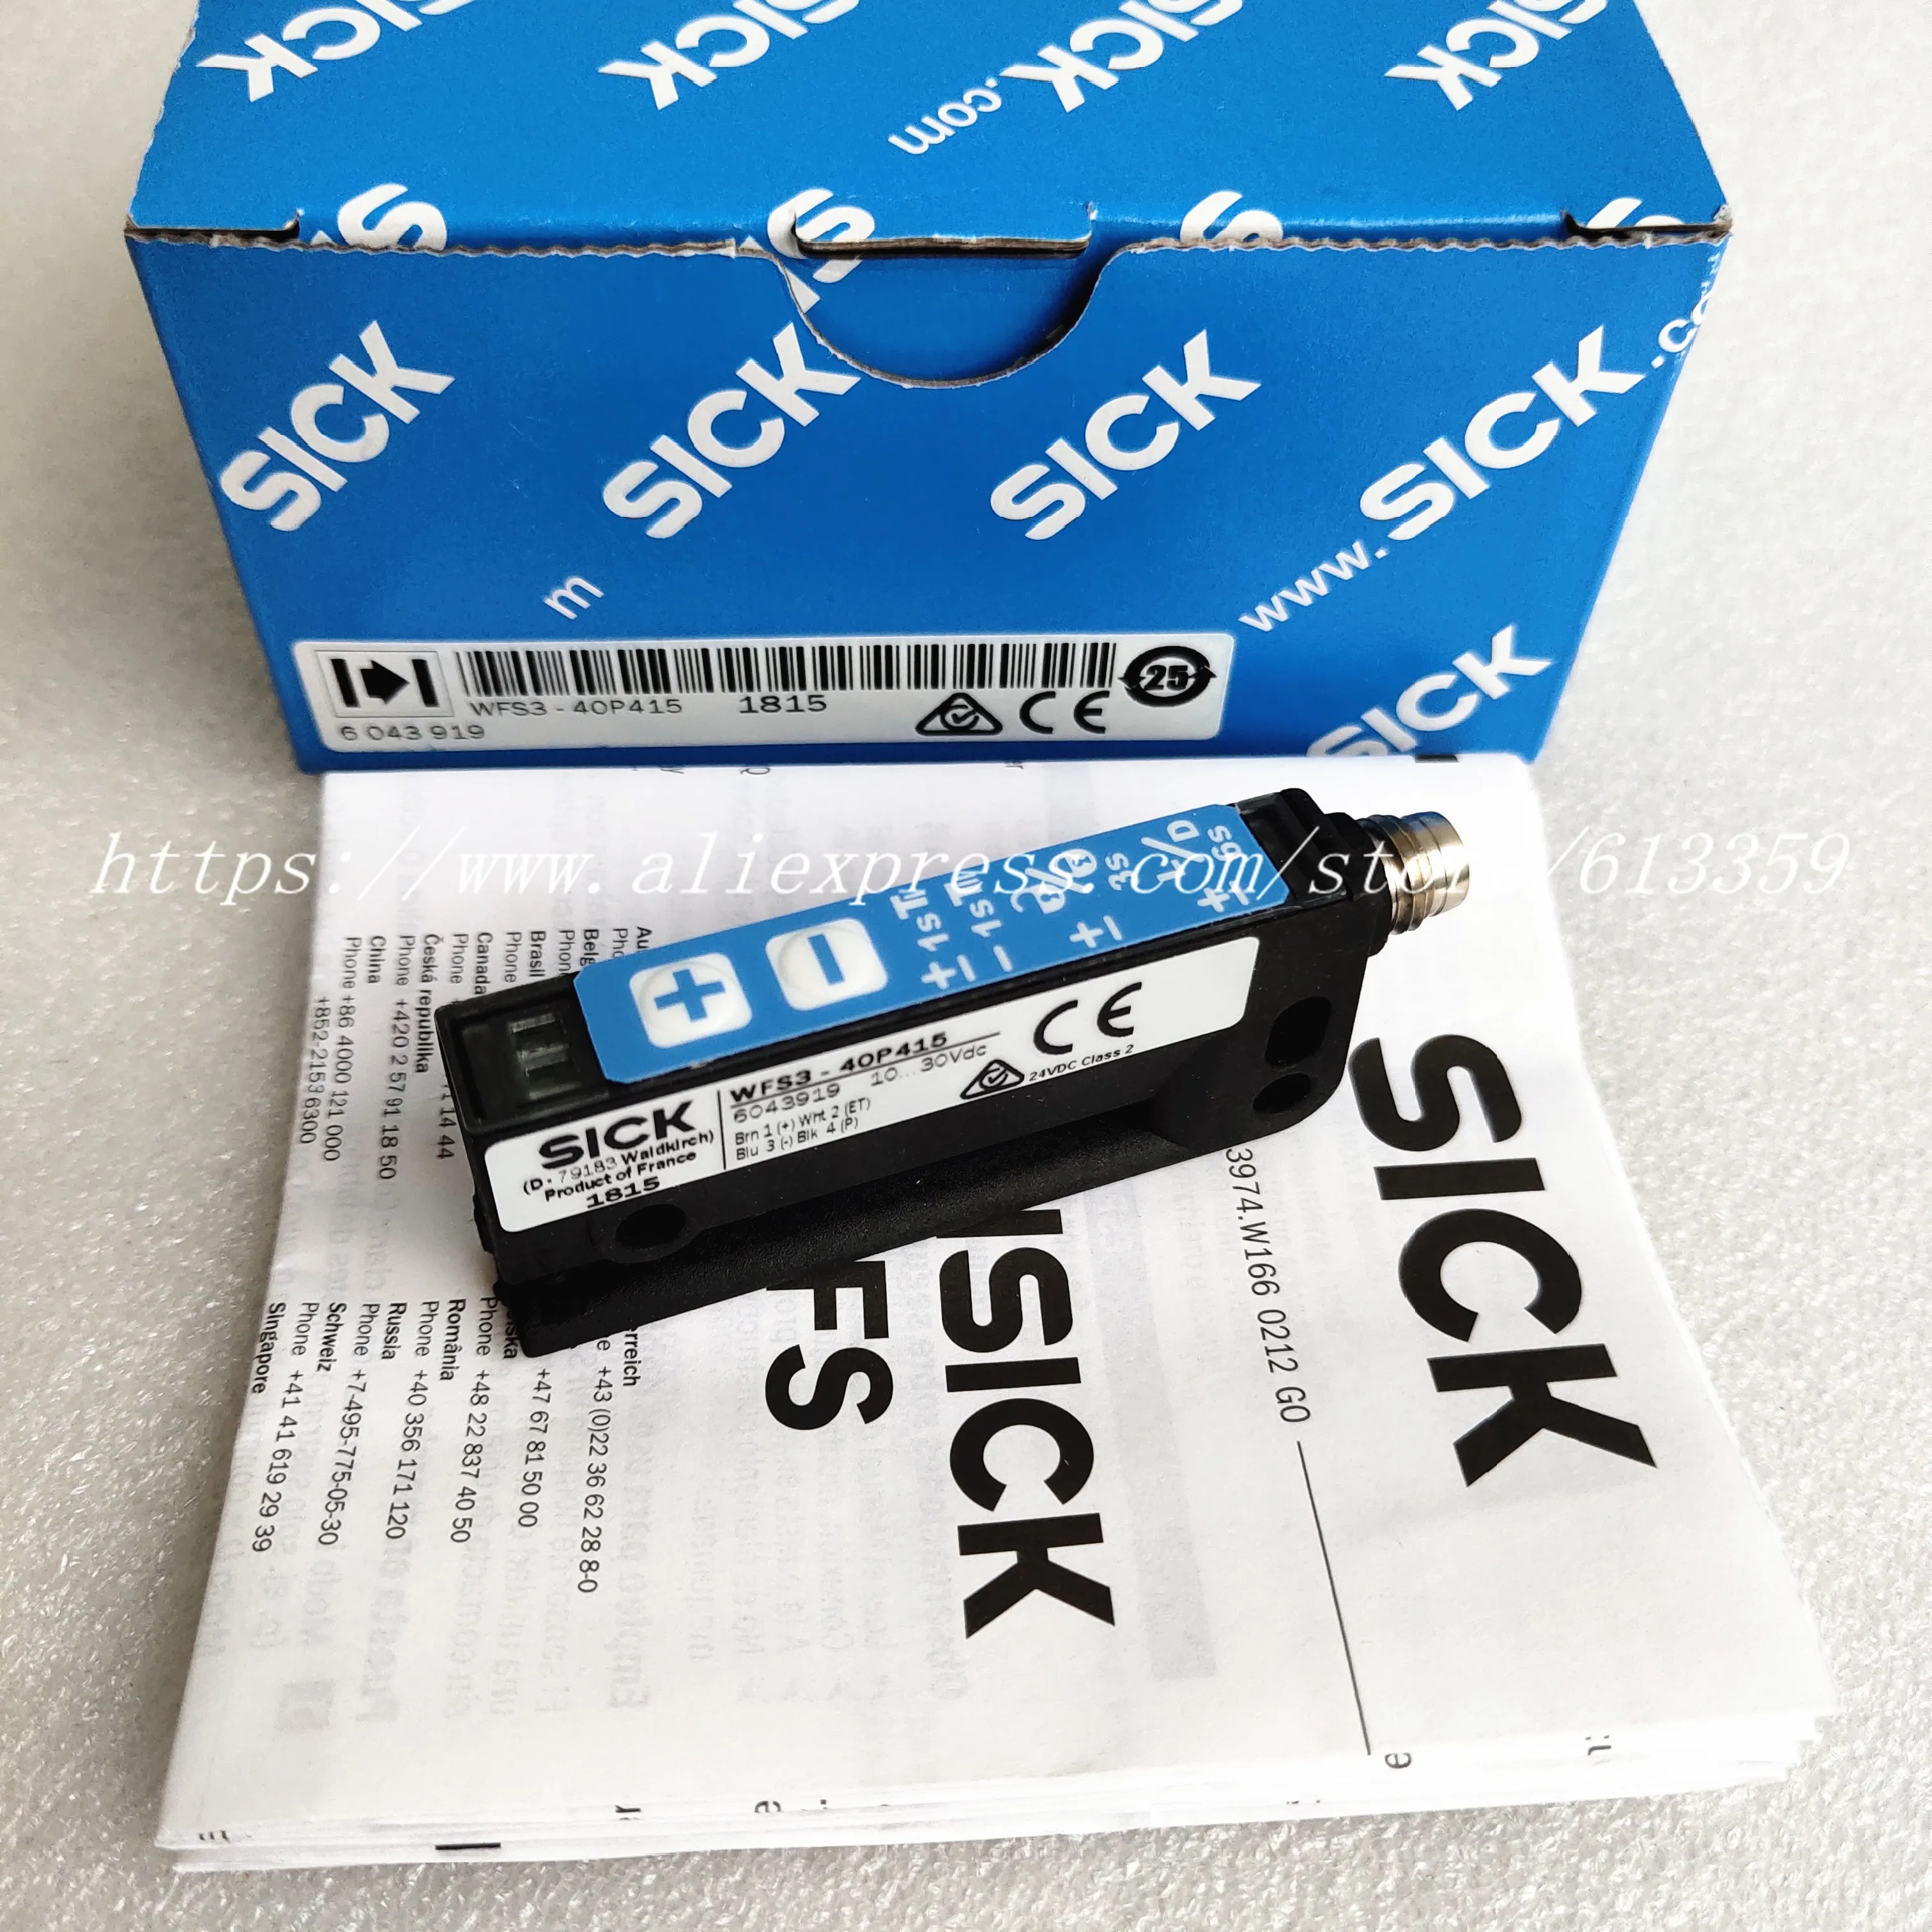 Sick WTV4-3P3441 Photoelectric Sensor 1029582 New In Box  NIB USA SELLER